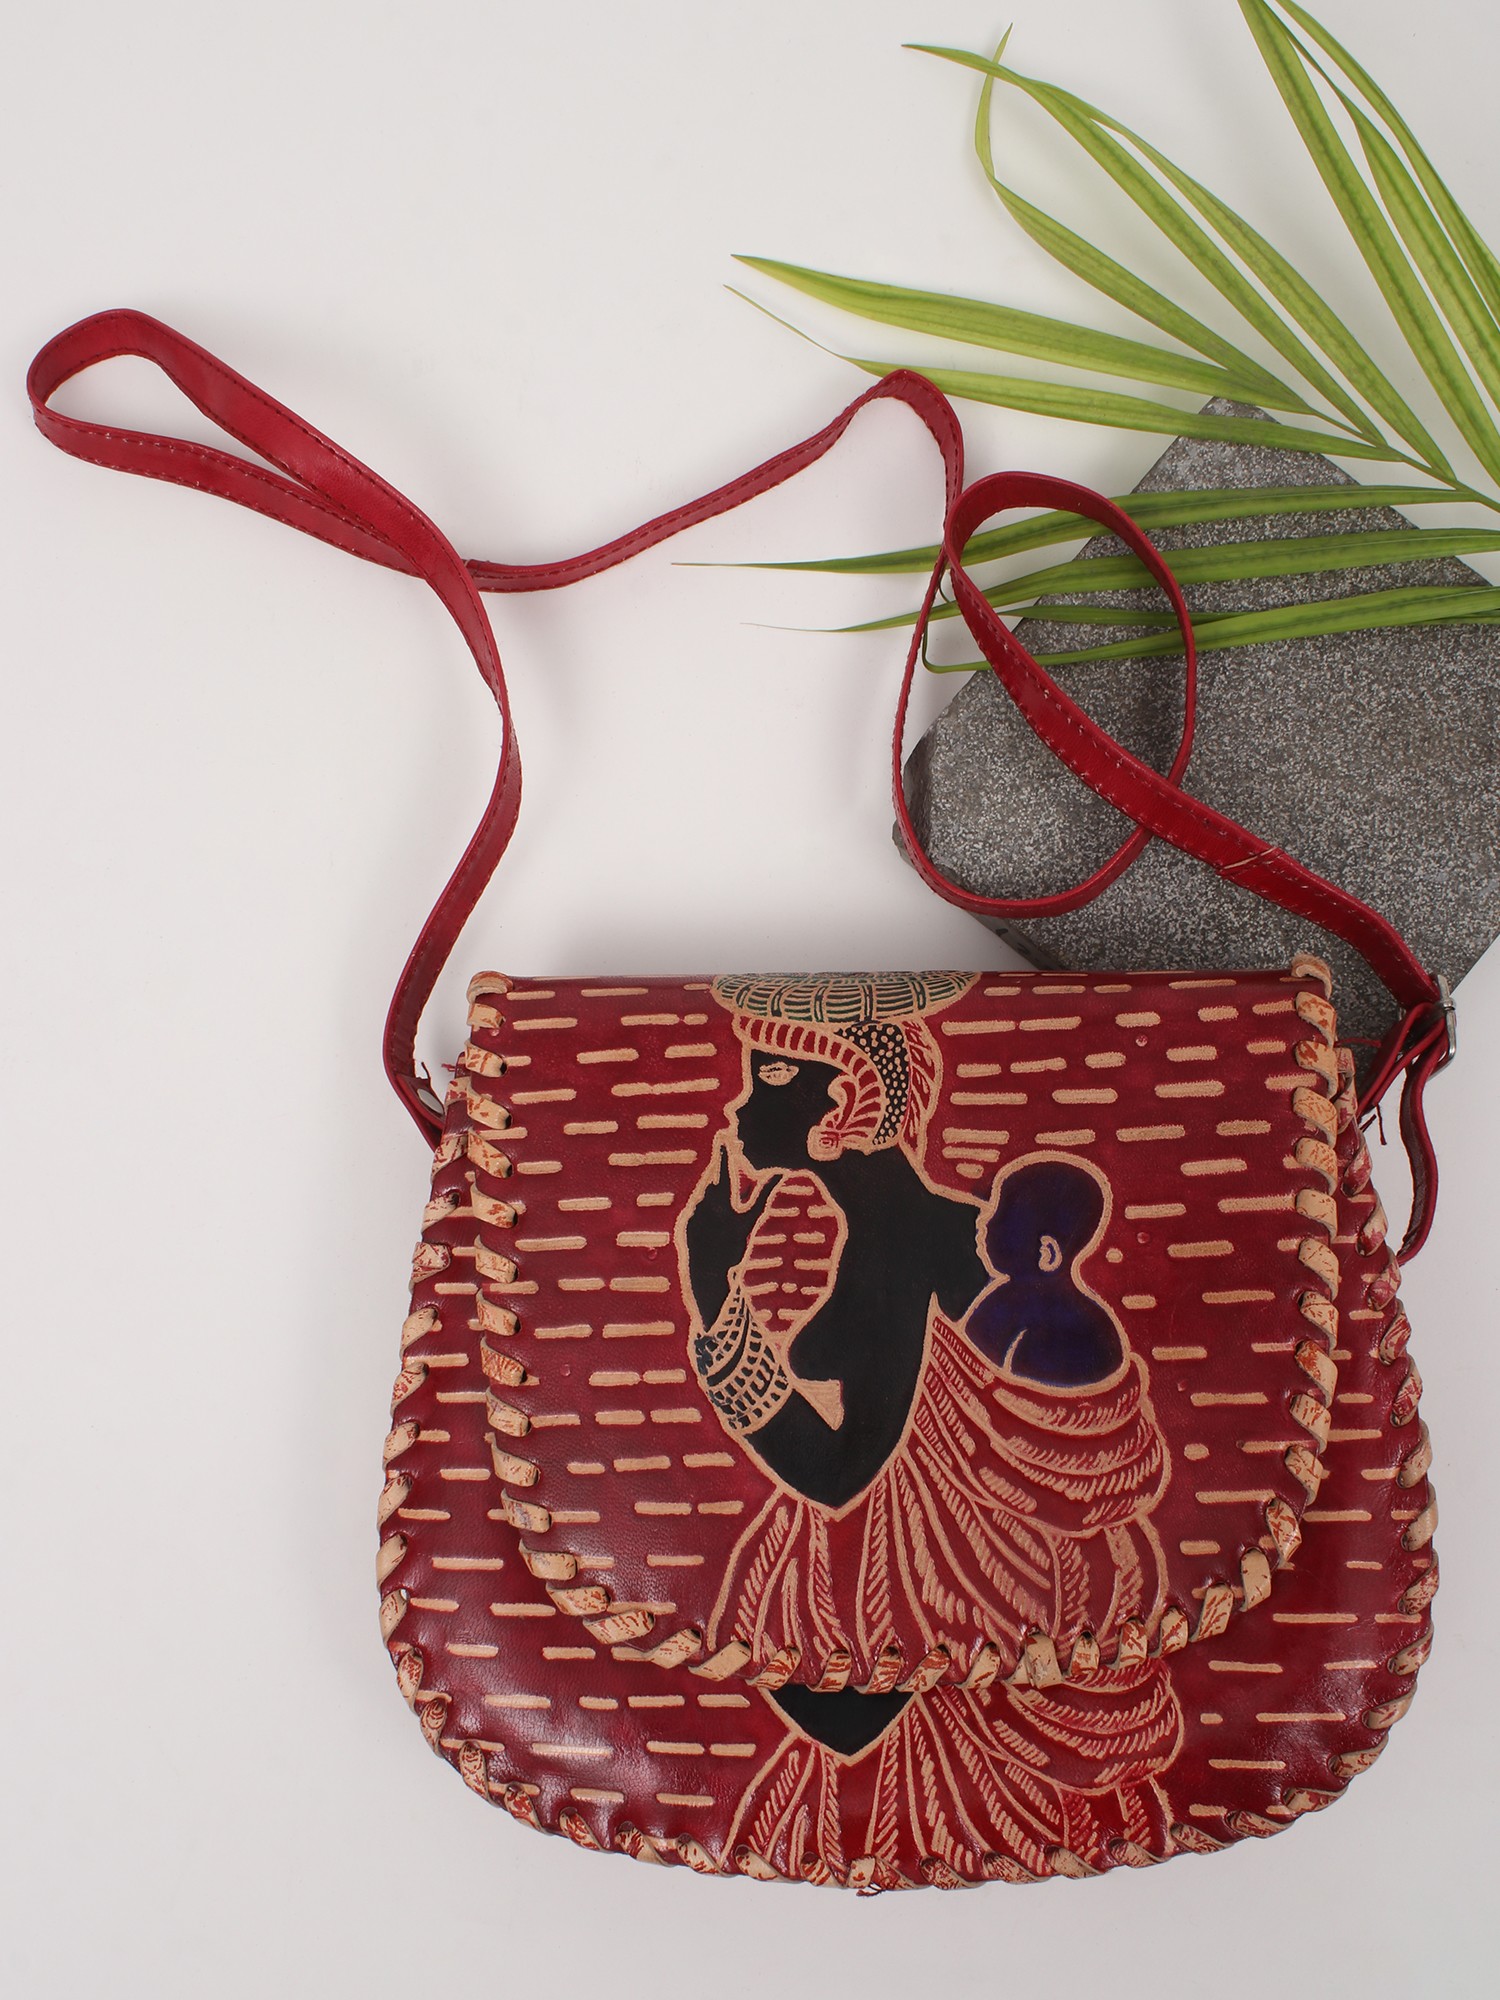 Real Leather Handmade Tote Bag India Shantiniketan Boho Purse Shopper Girls  | eBay